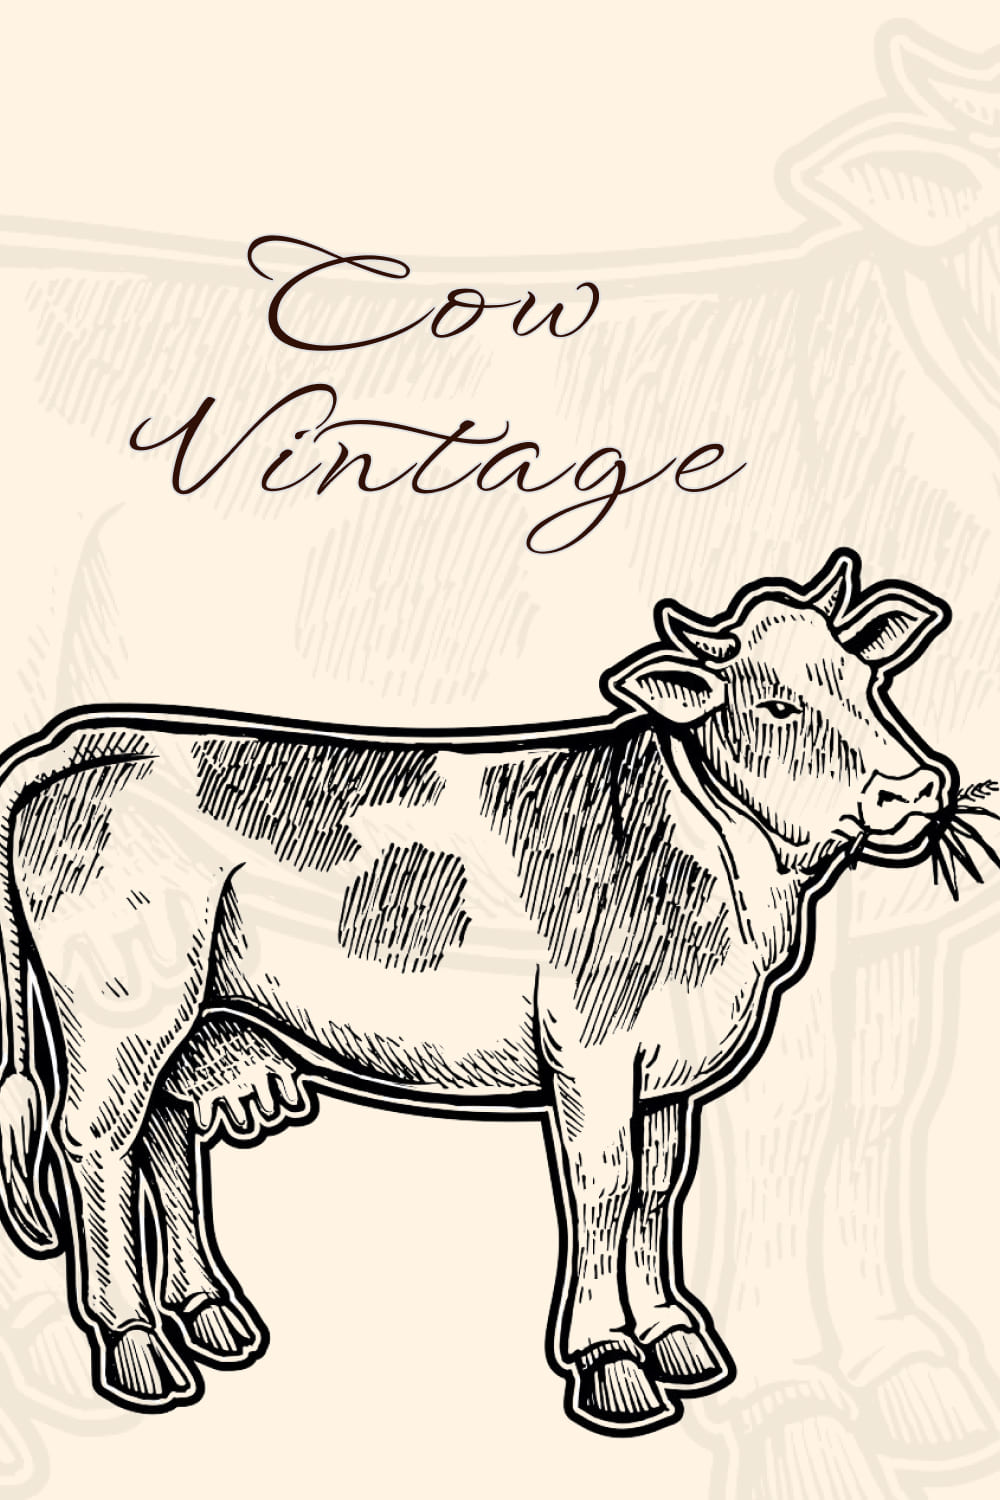 Cow Vintage Illustration - Pinterest Image Preview.